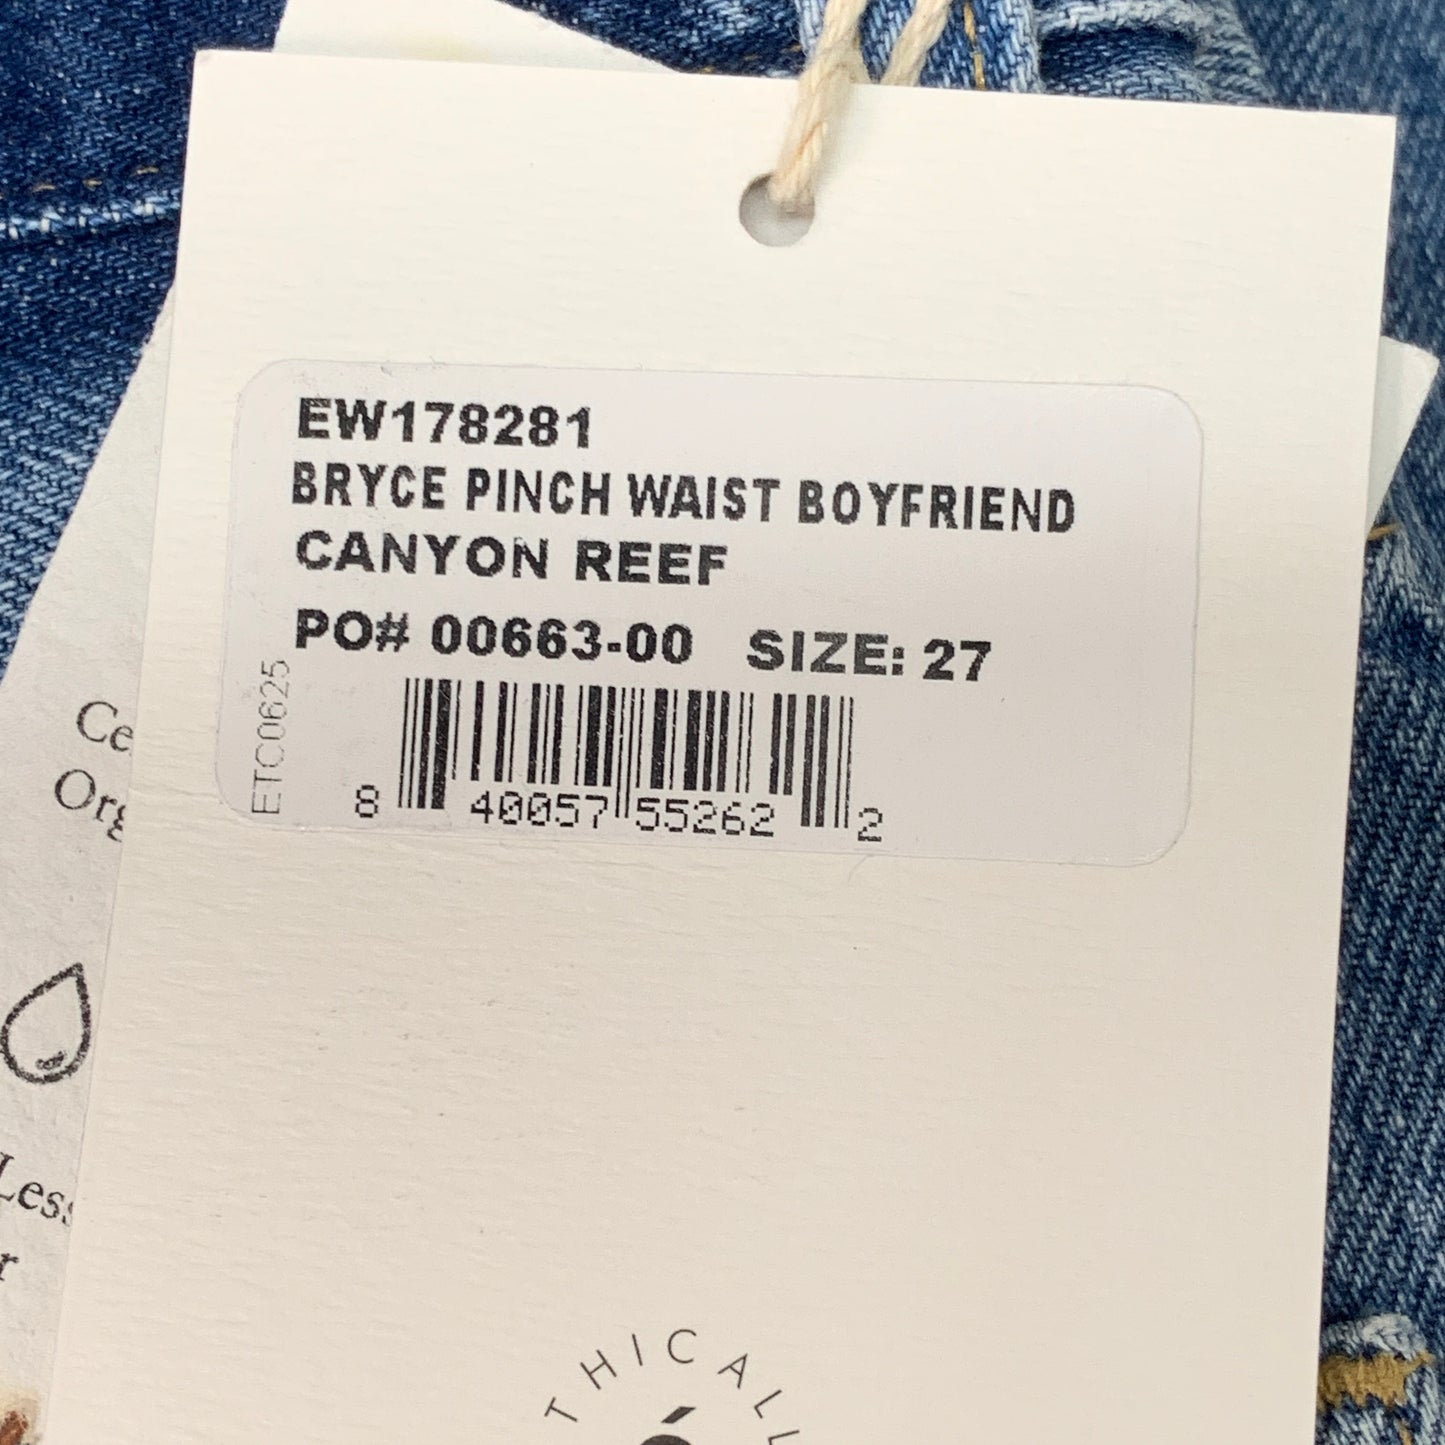 ETICA Bryce Pinch Waist Boyfriend Pant Canyon Reef Certified Organic Size 27 EW178281